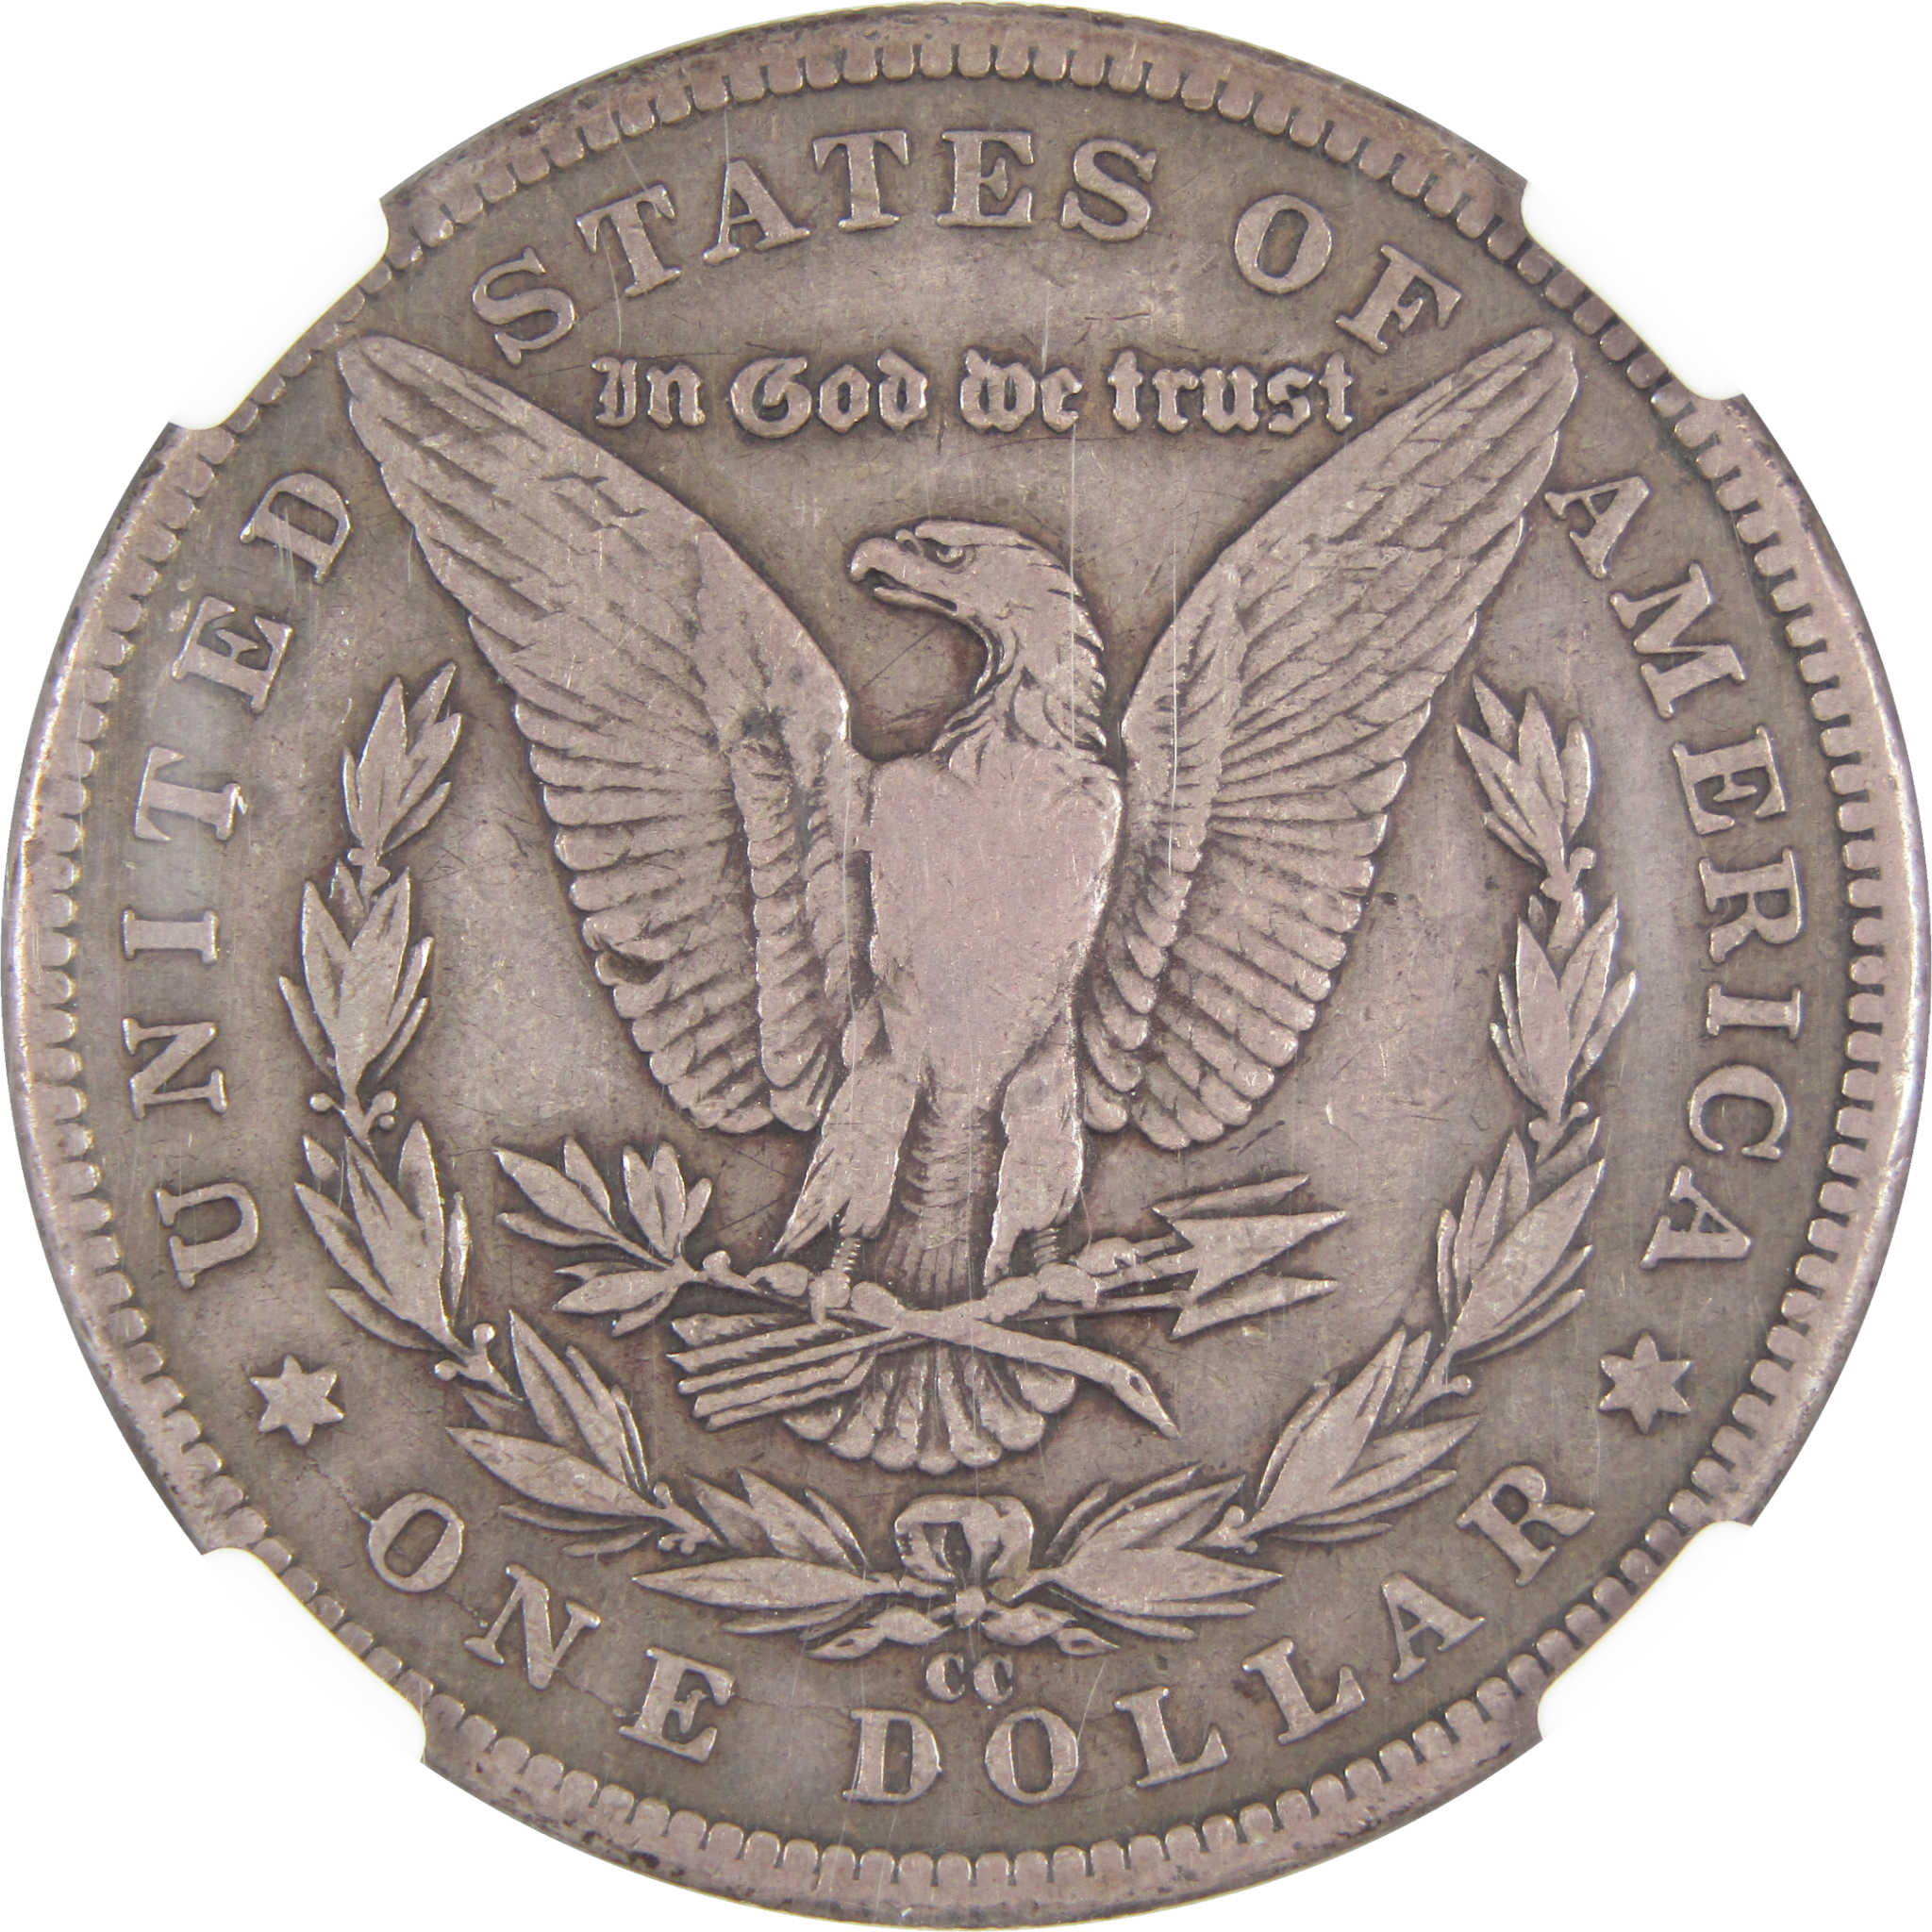 1889 CC Morgan Dollar F 15 NGC 90% Silver US Coin SKU:I2853 - Morgan coin - Morgan silver dollar - Morgan silver dollar for sale - Profile Coins &amp; Collectibles